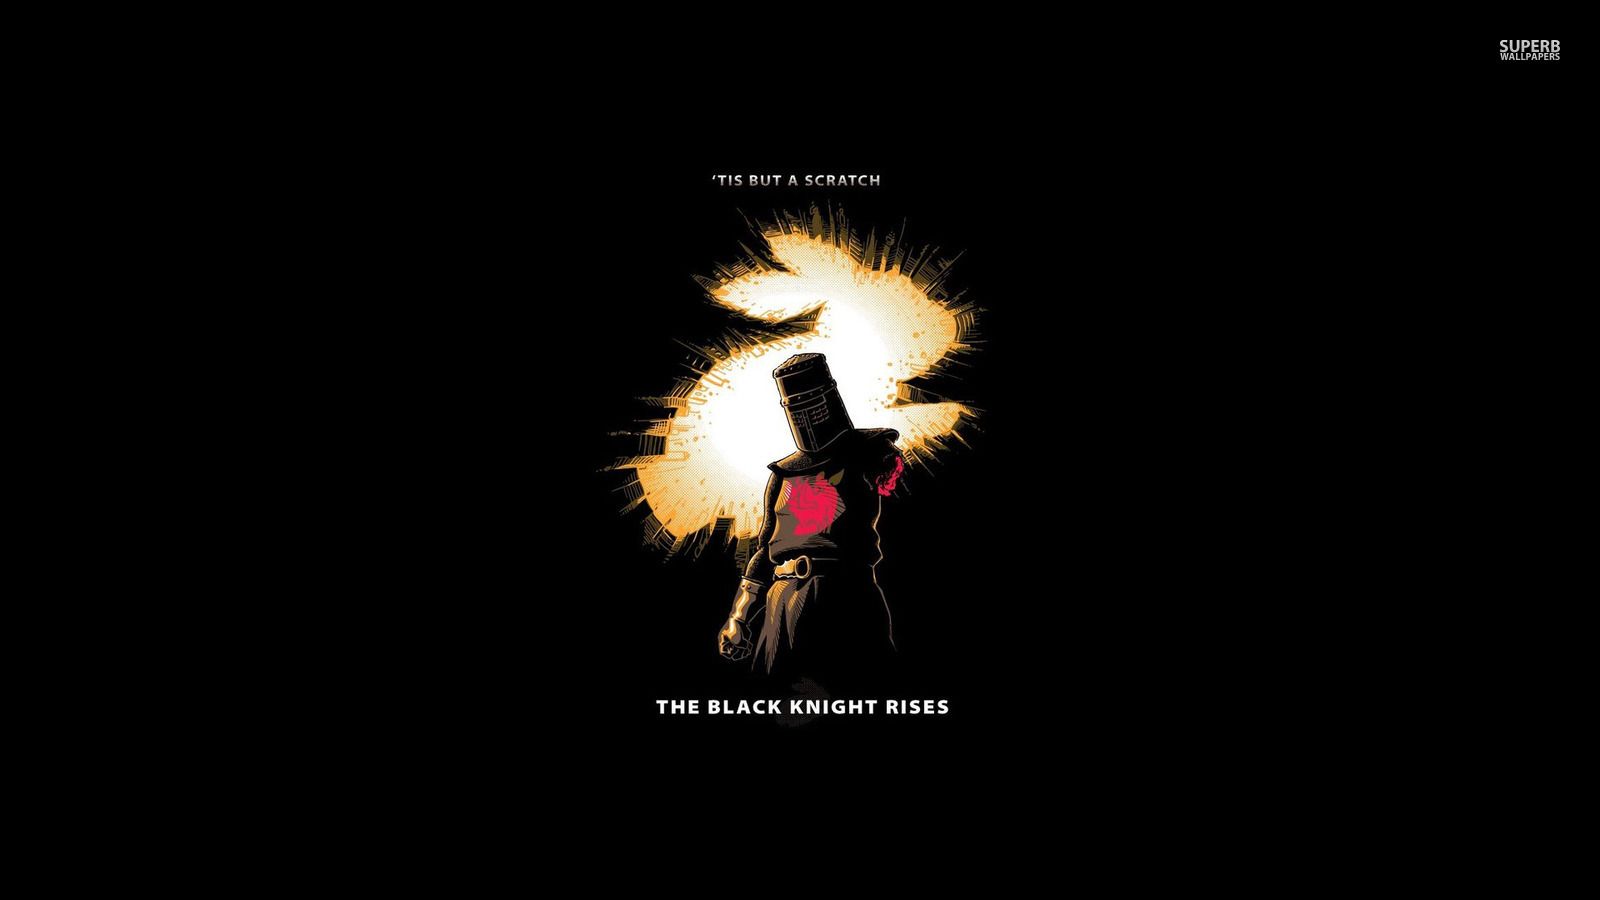 The Black Knight Rises - Monty Python Wallpaper 38685246 - Fanpop